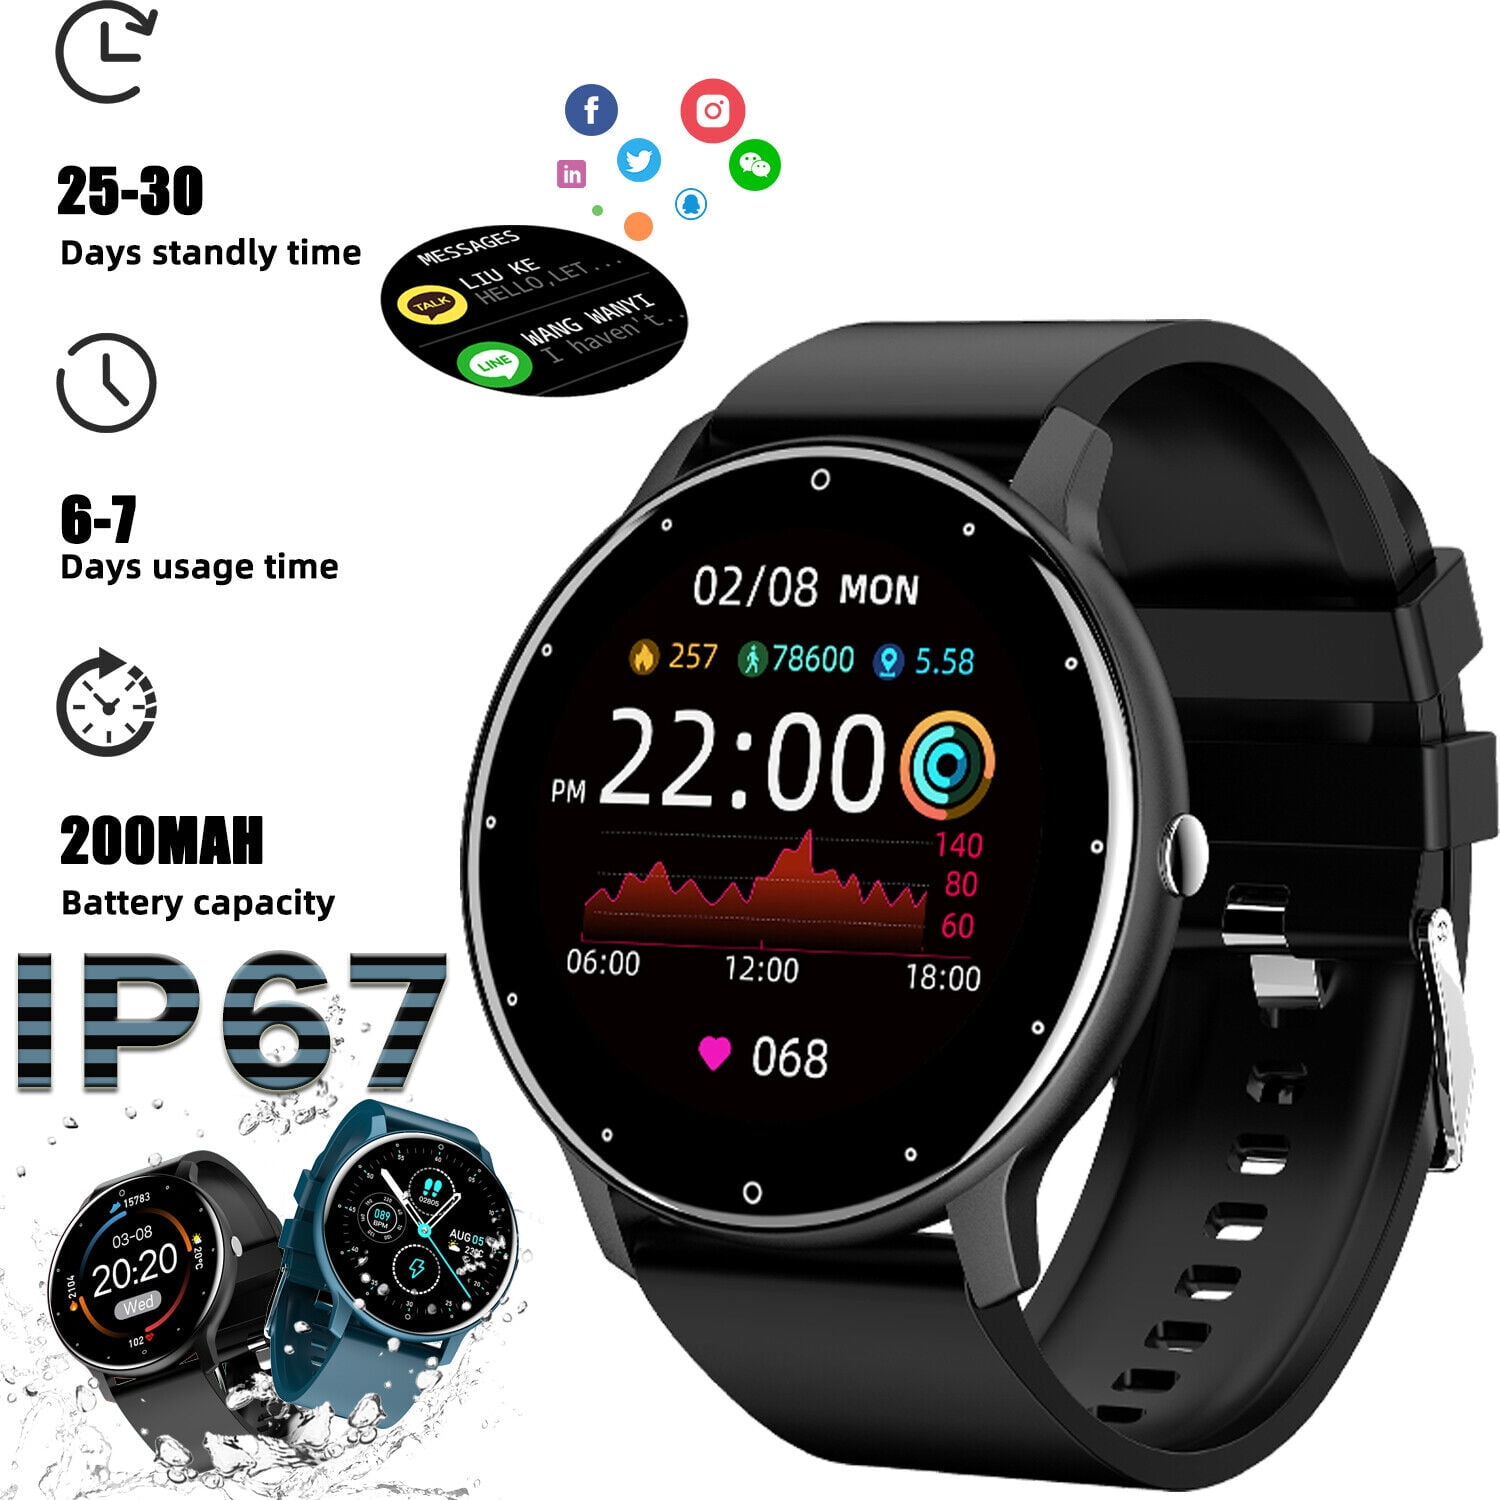 SAMSUNG Galaxy Watch - Bluetooth Smart Watch (42 mm) - Rose Gold 